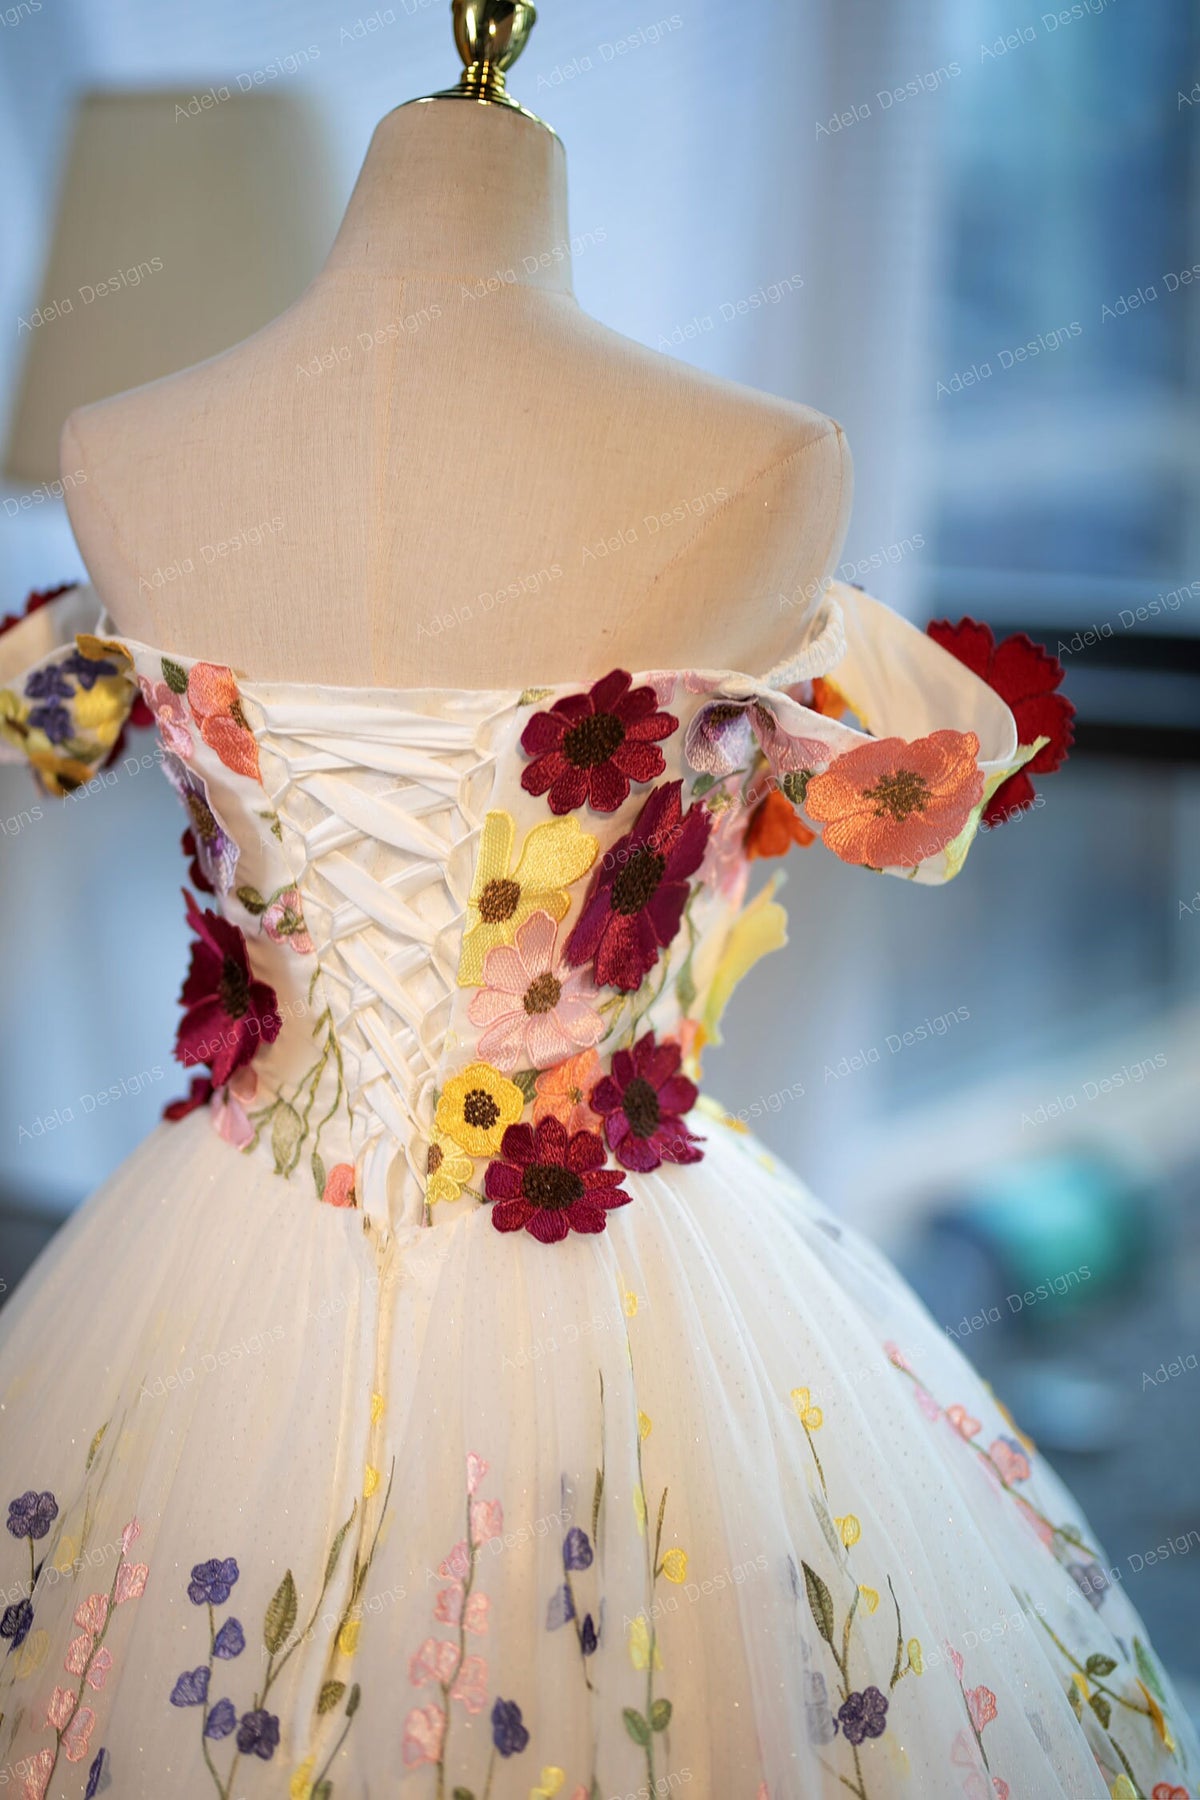 3D Floral Lace Ball Gown Wedding Dress Bridal Off The Shoulder Lace Bare Shoulders Open Back Ballgown Corset Back Colorful Dress